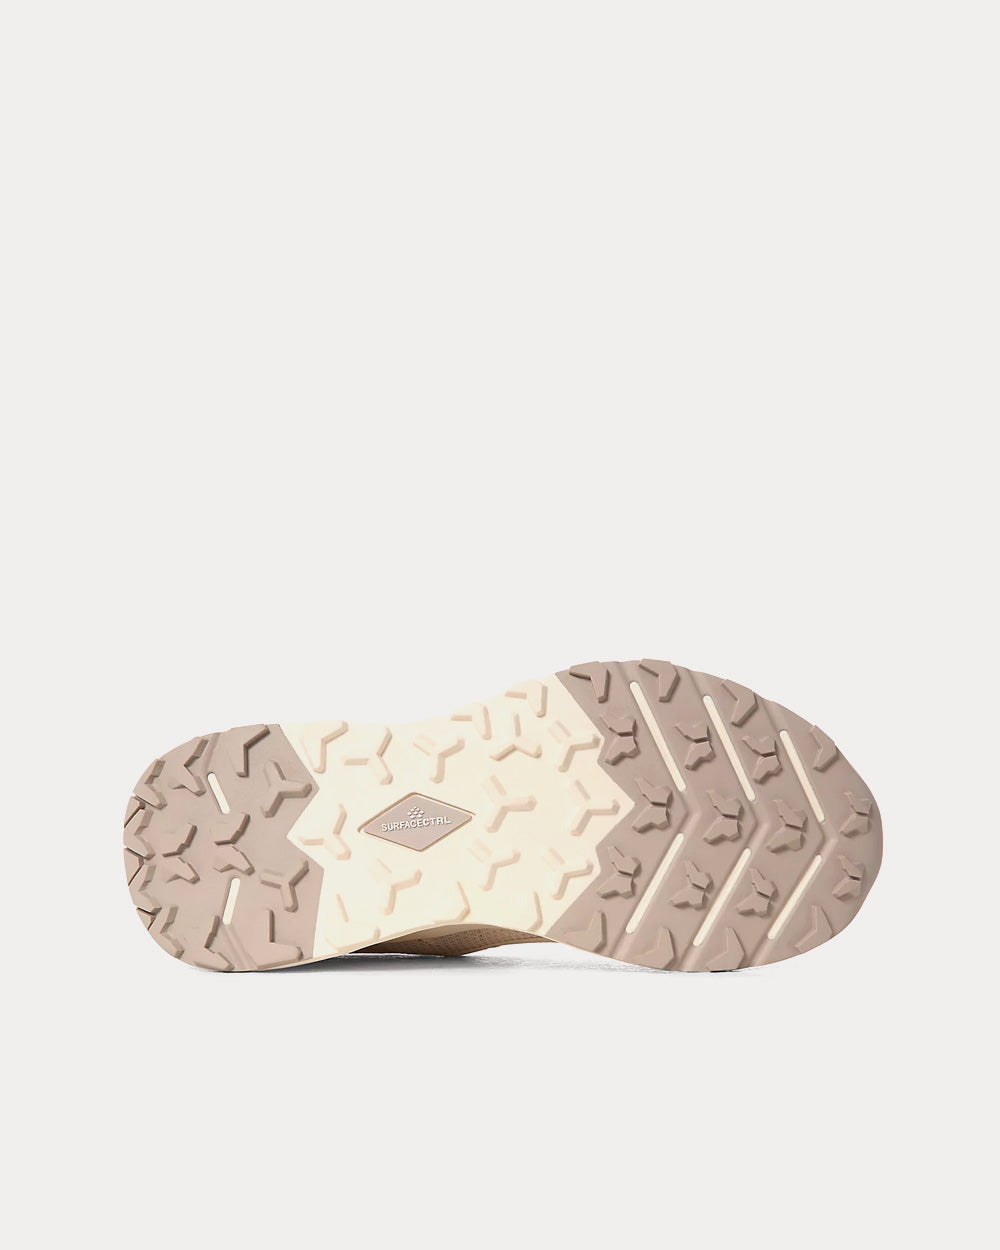 The North Face - Vectiv™ Hypnum Gardenia White / Silver Grey Running Shoes